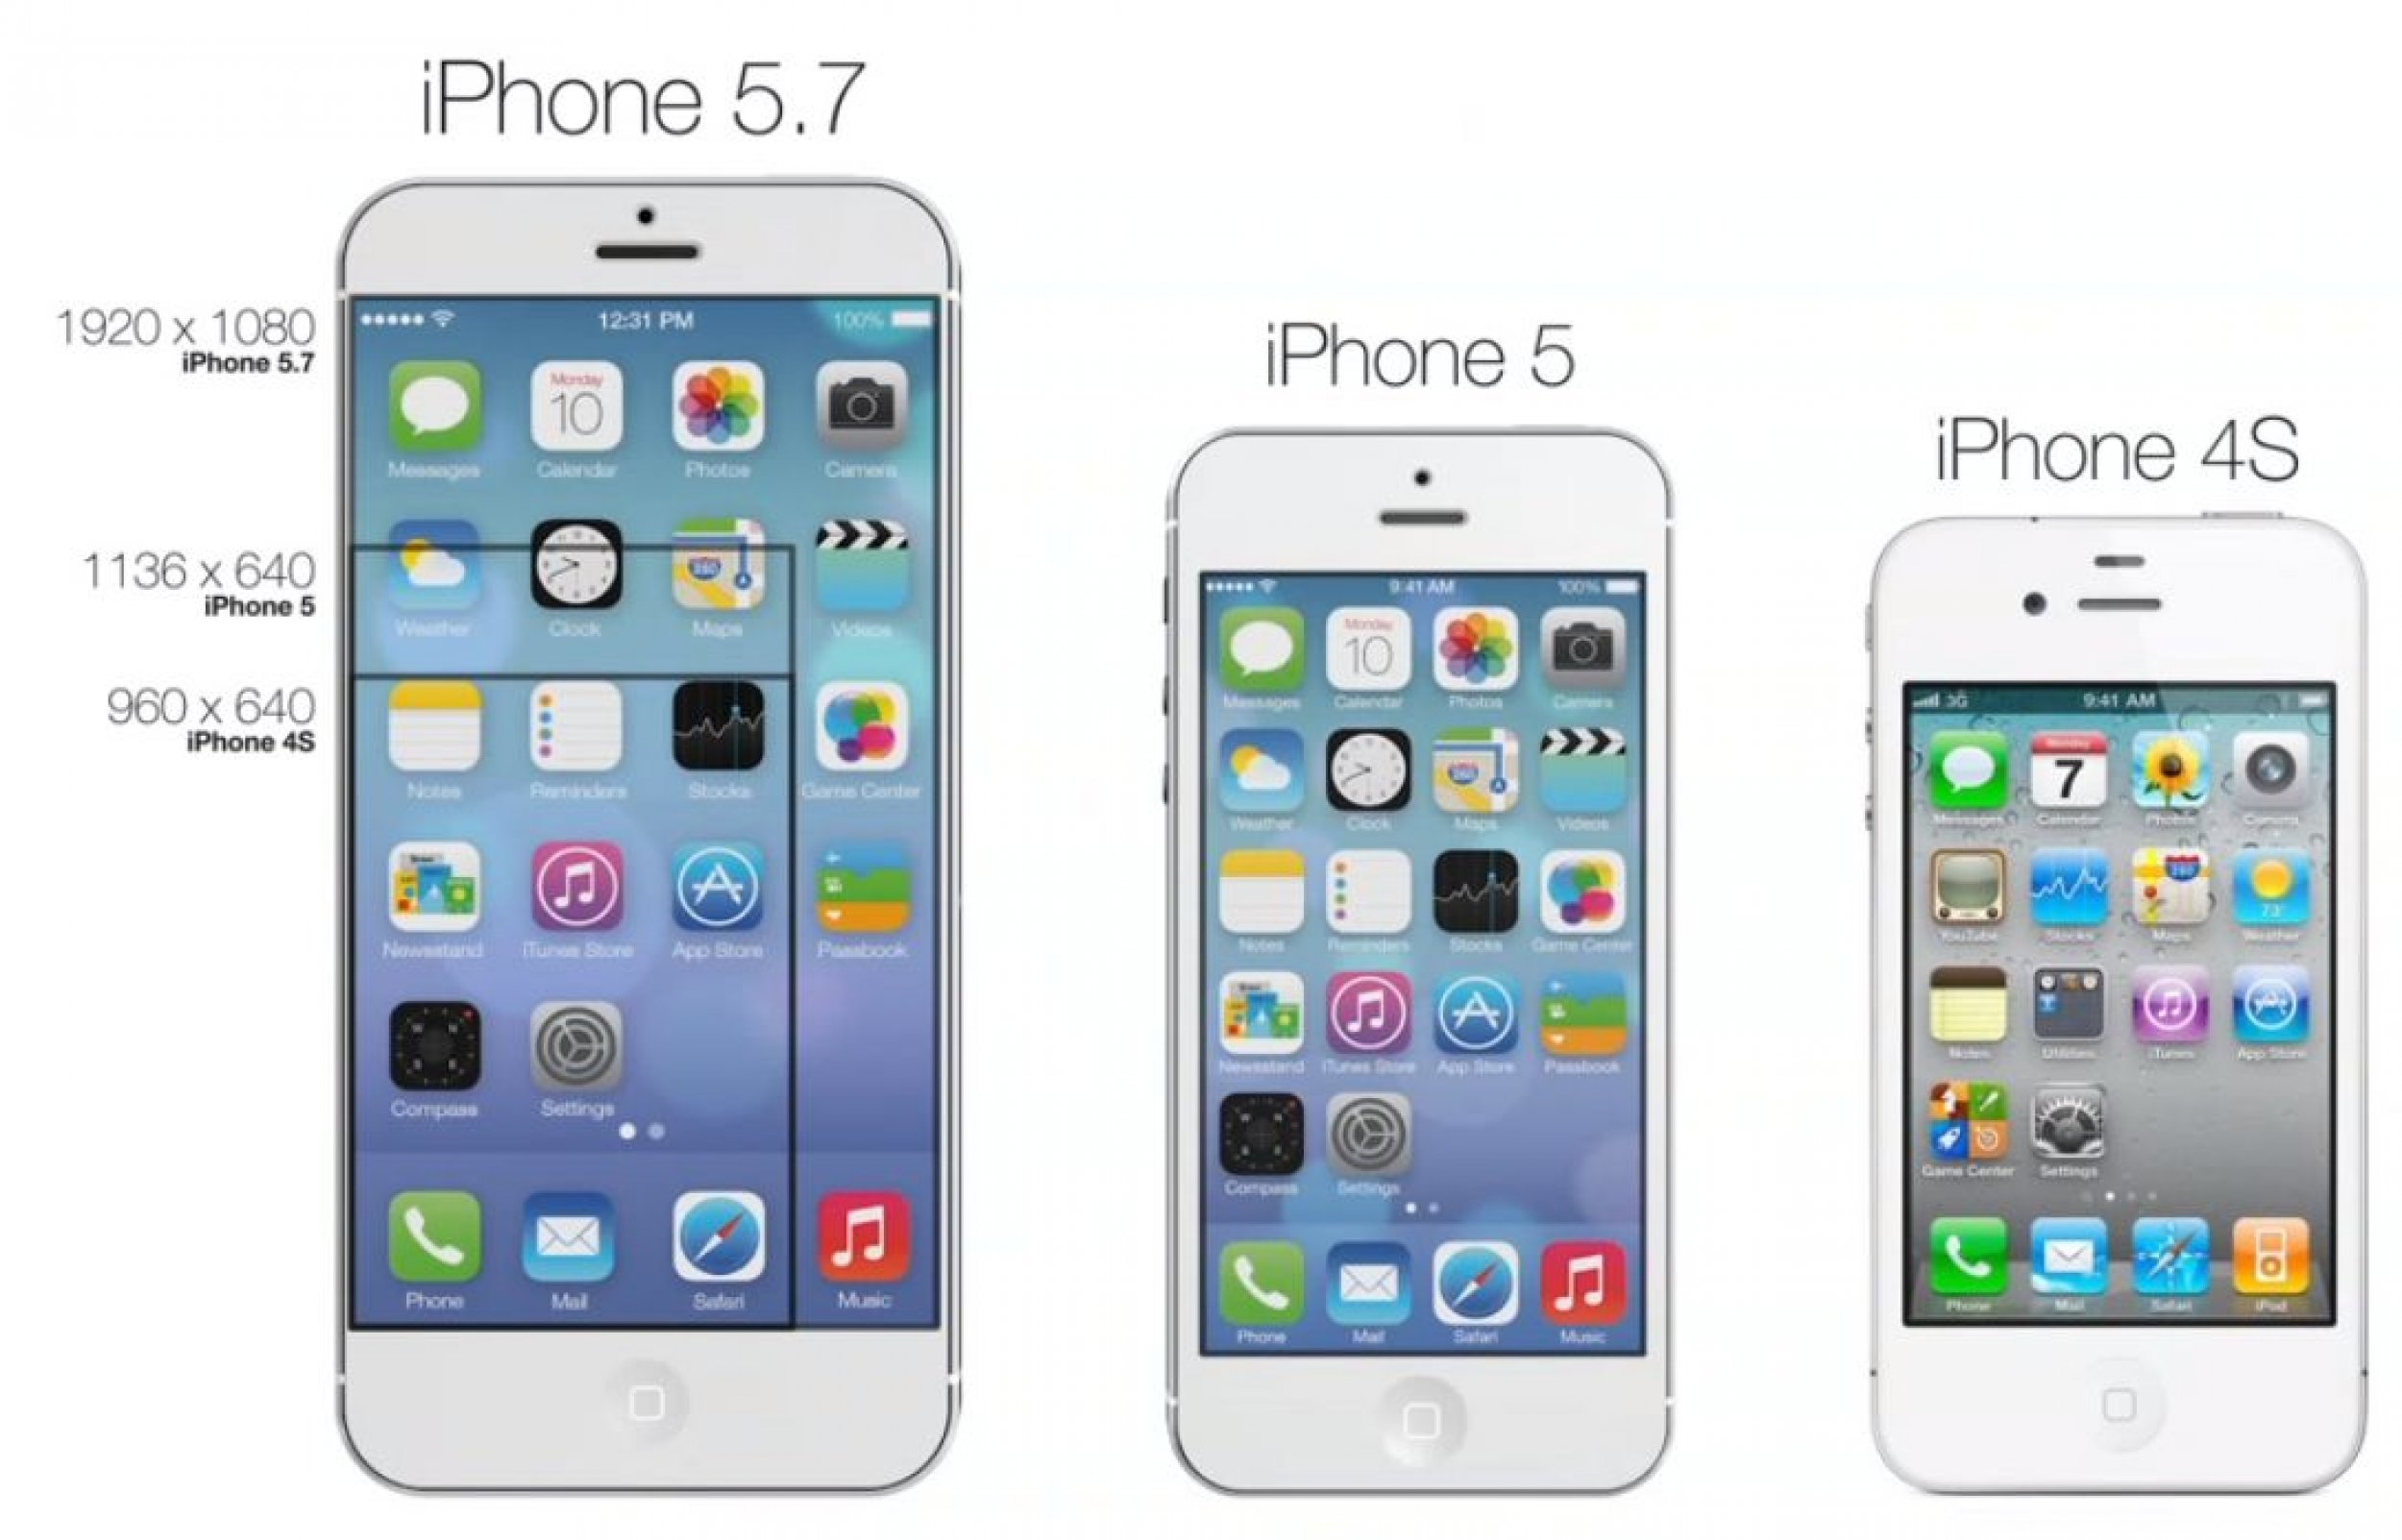 Iphone 5 7. Айфон 5s диагональ экрана. Айфон 5s диагональ экрана в дюймах. Айфон 5s дюймы. Айфон 5 диагональ экрана.